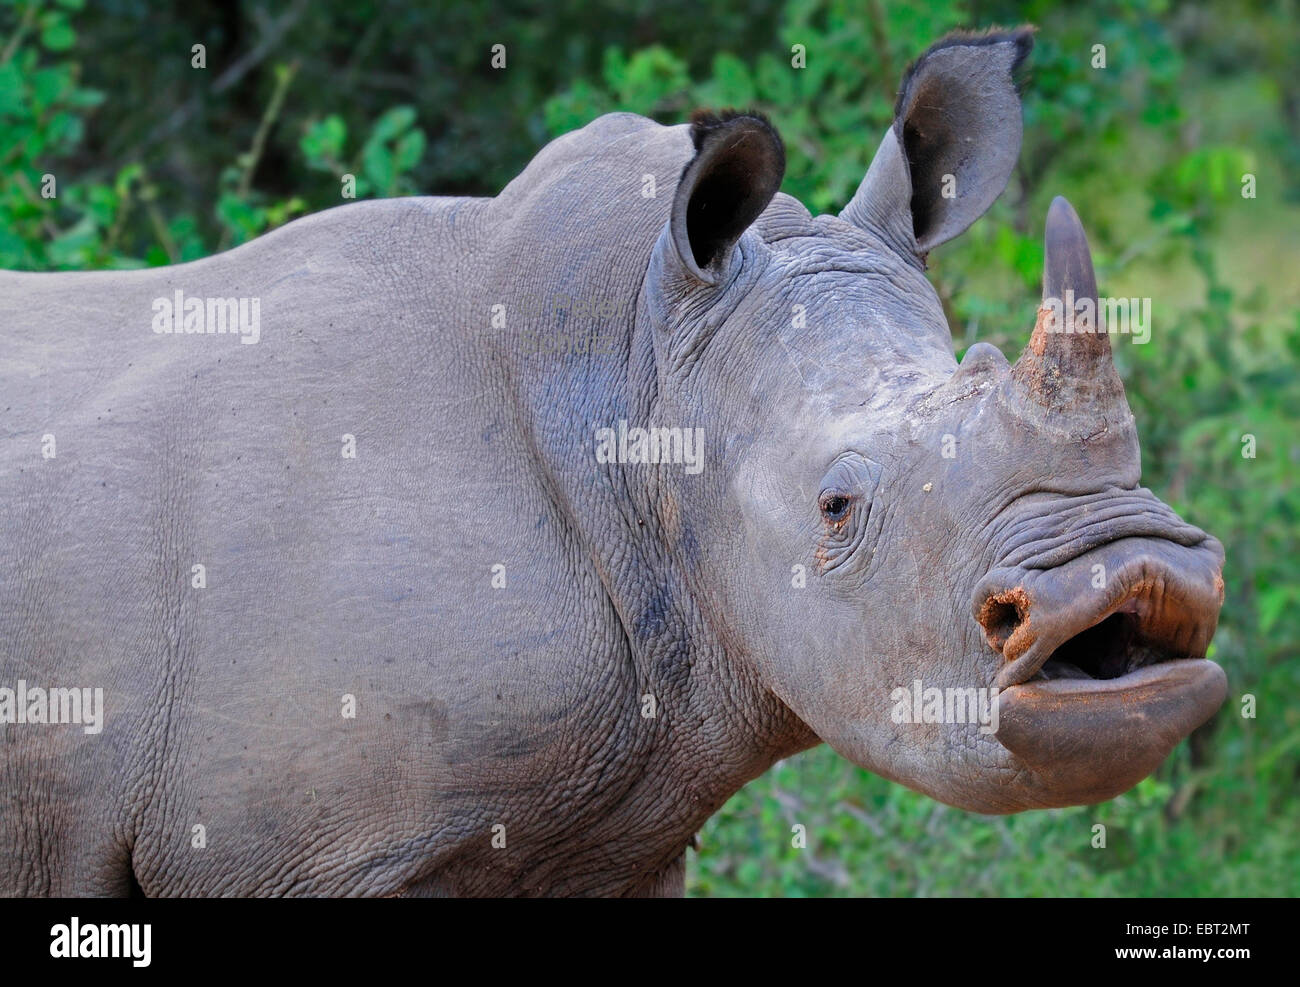 white rhinoceros, square-lipped rhinoceros, grass rhinoceros (Ceratotherium simum), portrait, South Africa Stock Photo